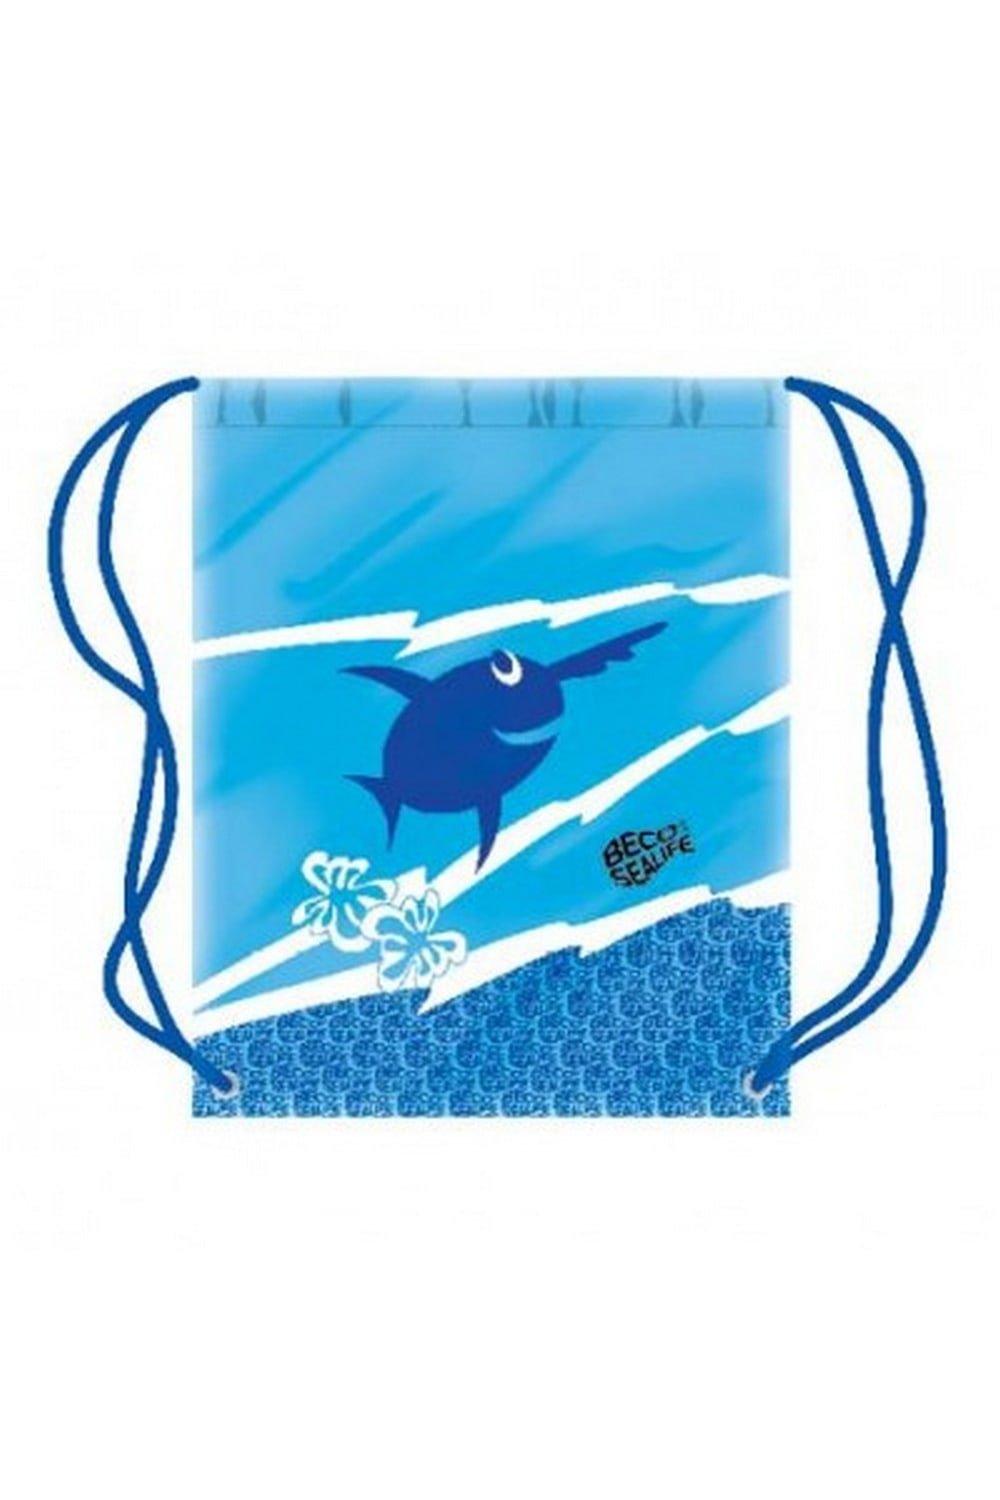 Сумка для плавания Sealife Beco, синий доска для плавания beco 9687 синий